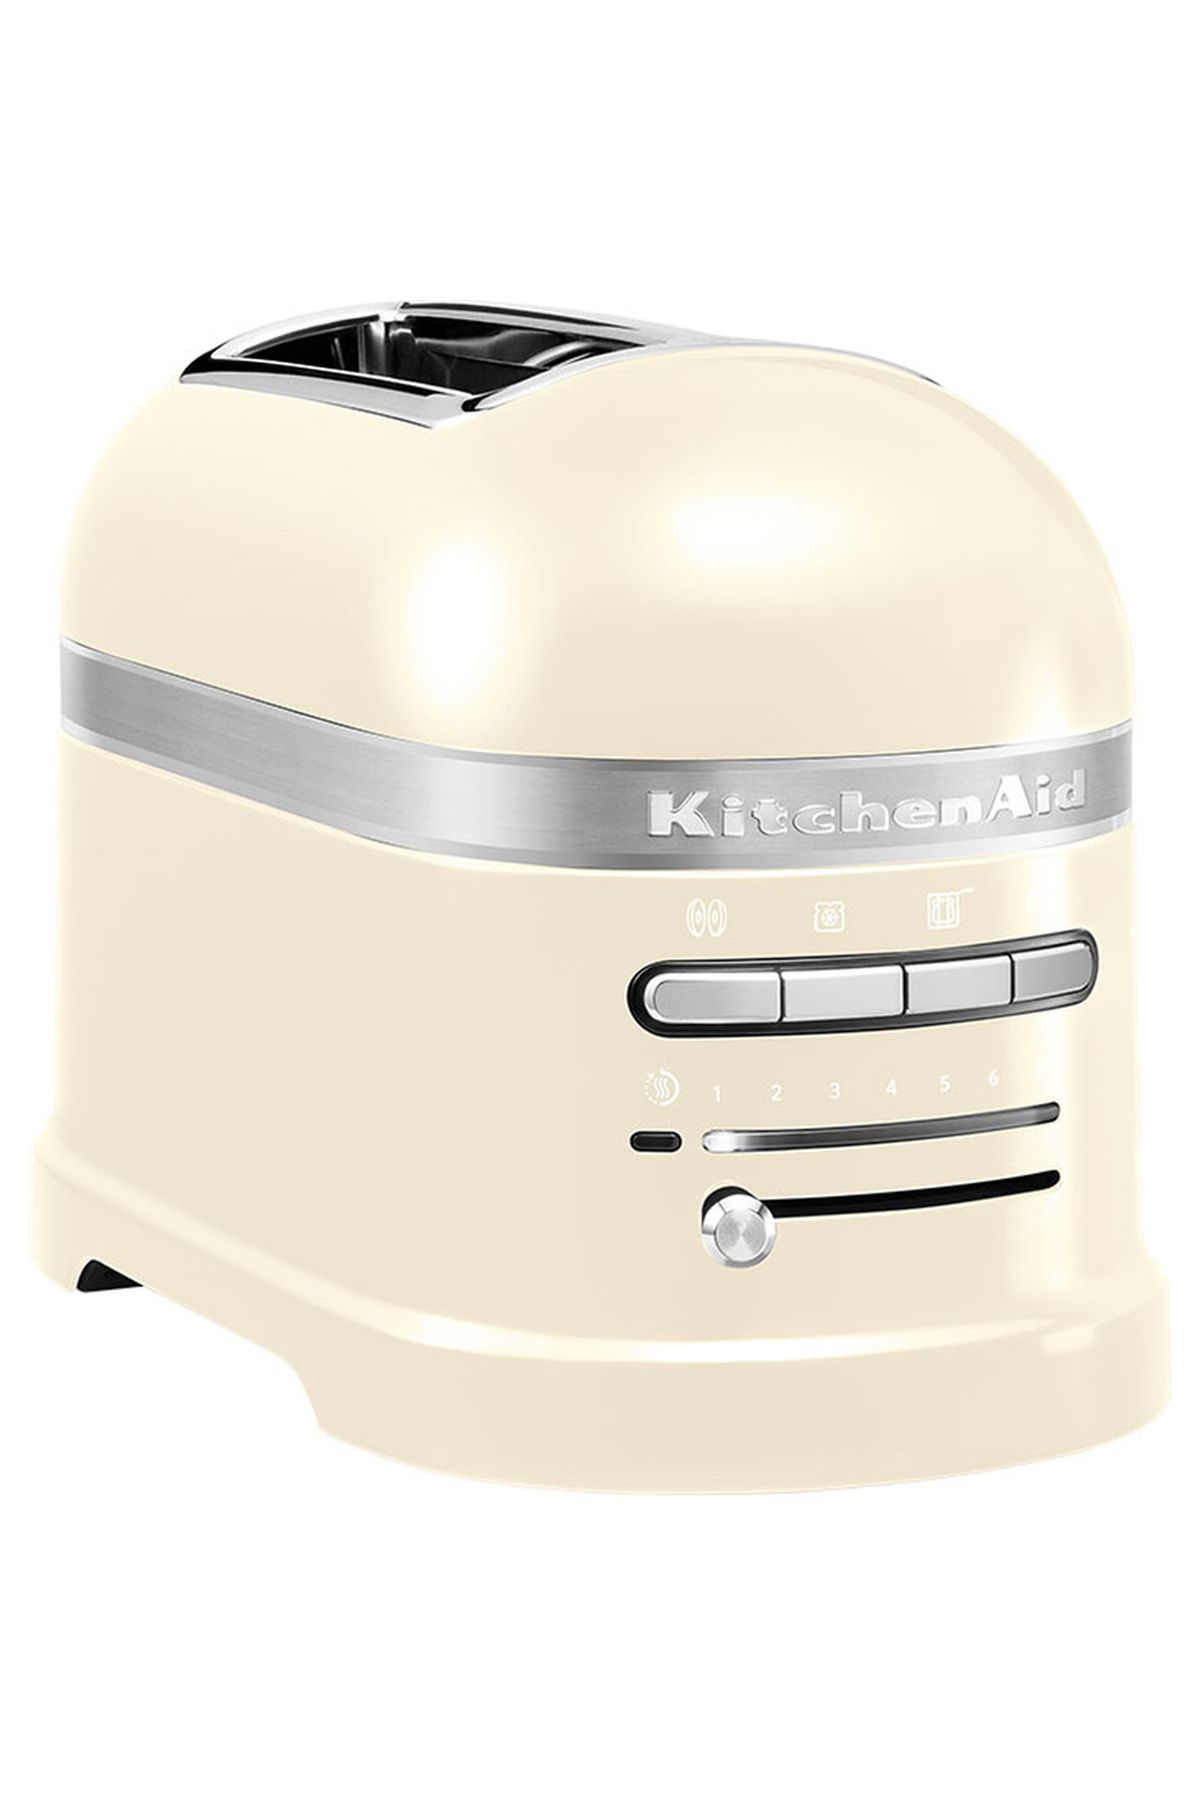 Kitchenaid Artisan Krem Ekmek Kızartma Makinesi